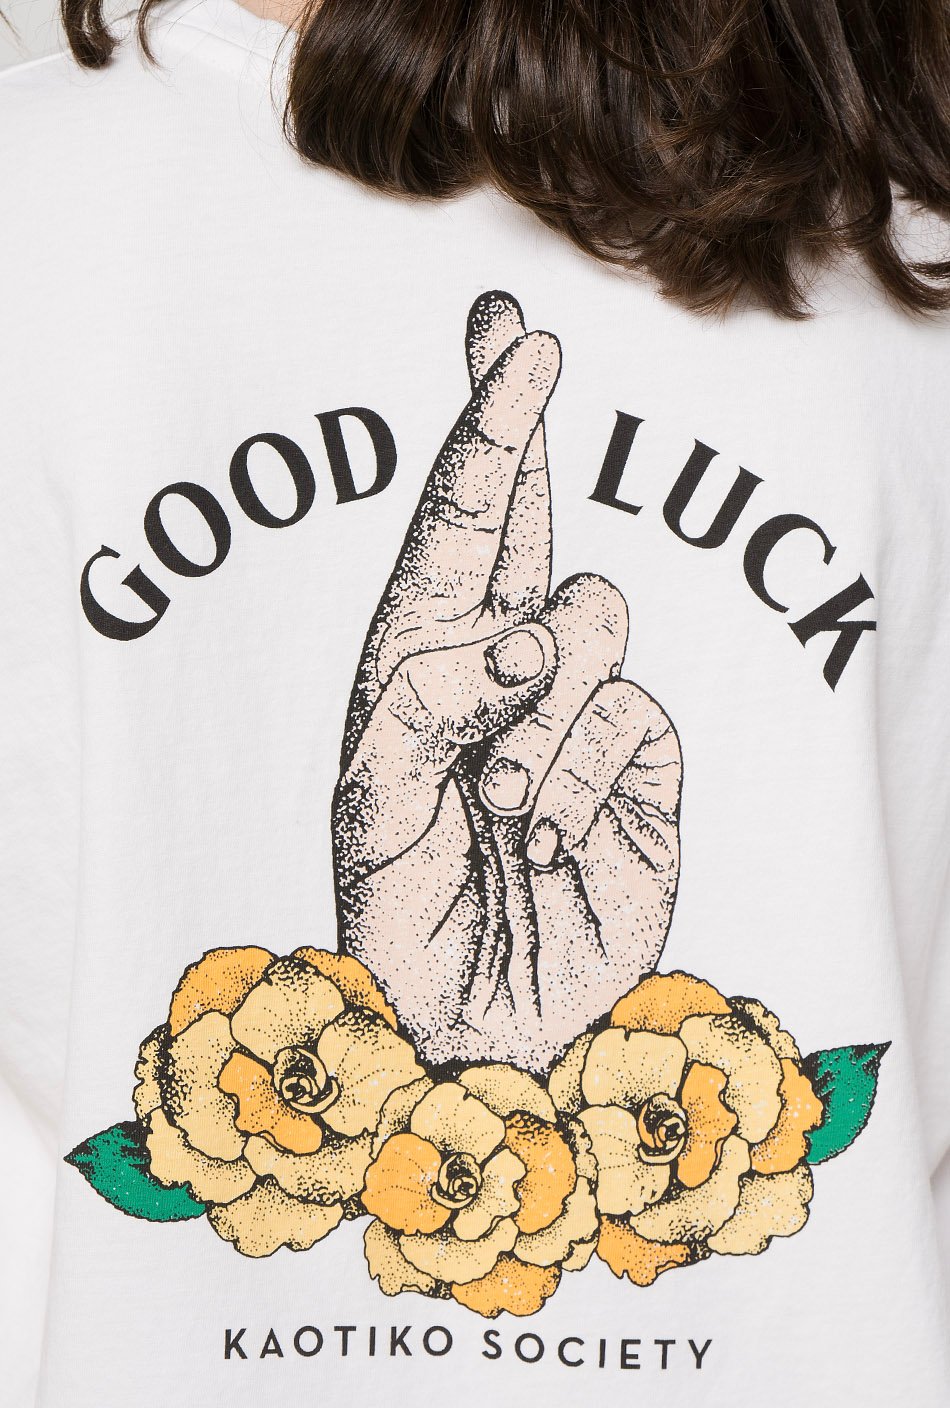 Camiseta Tie-Dye Good Luck Blanca